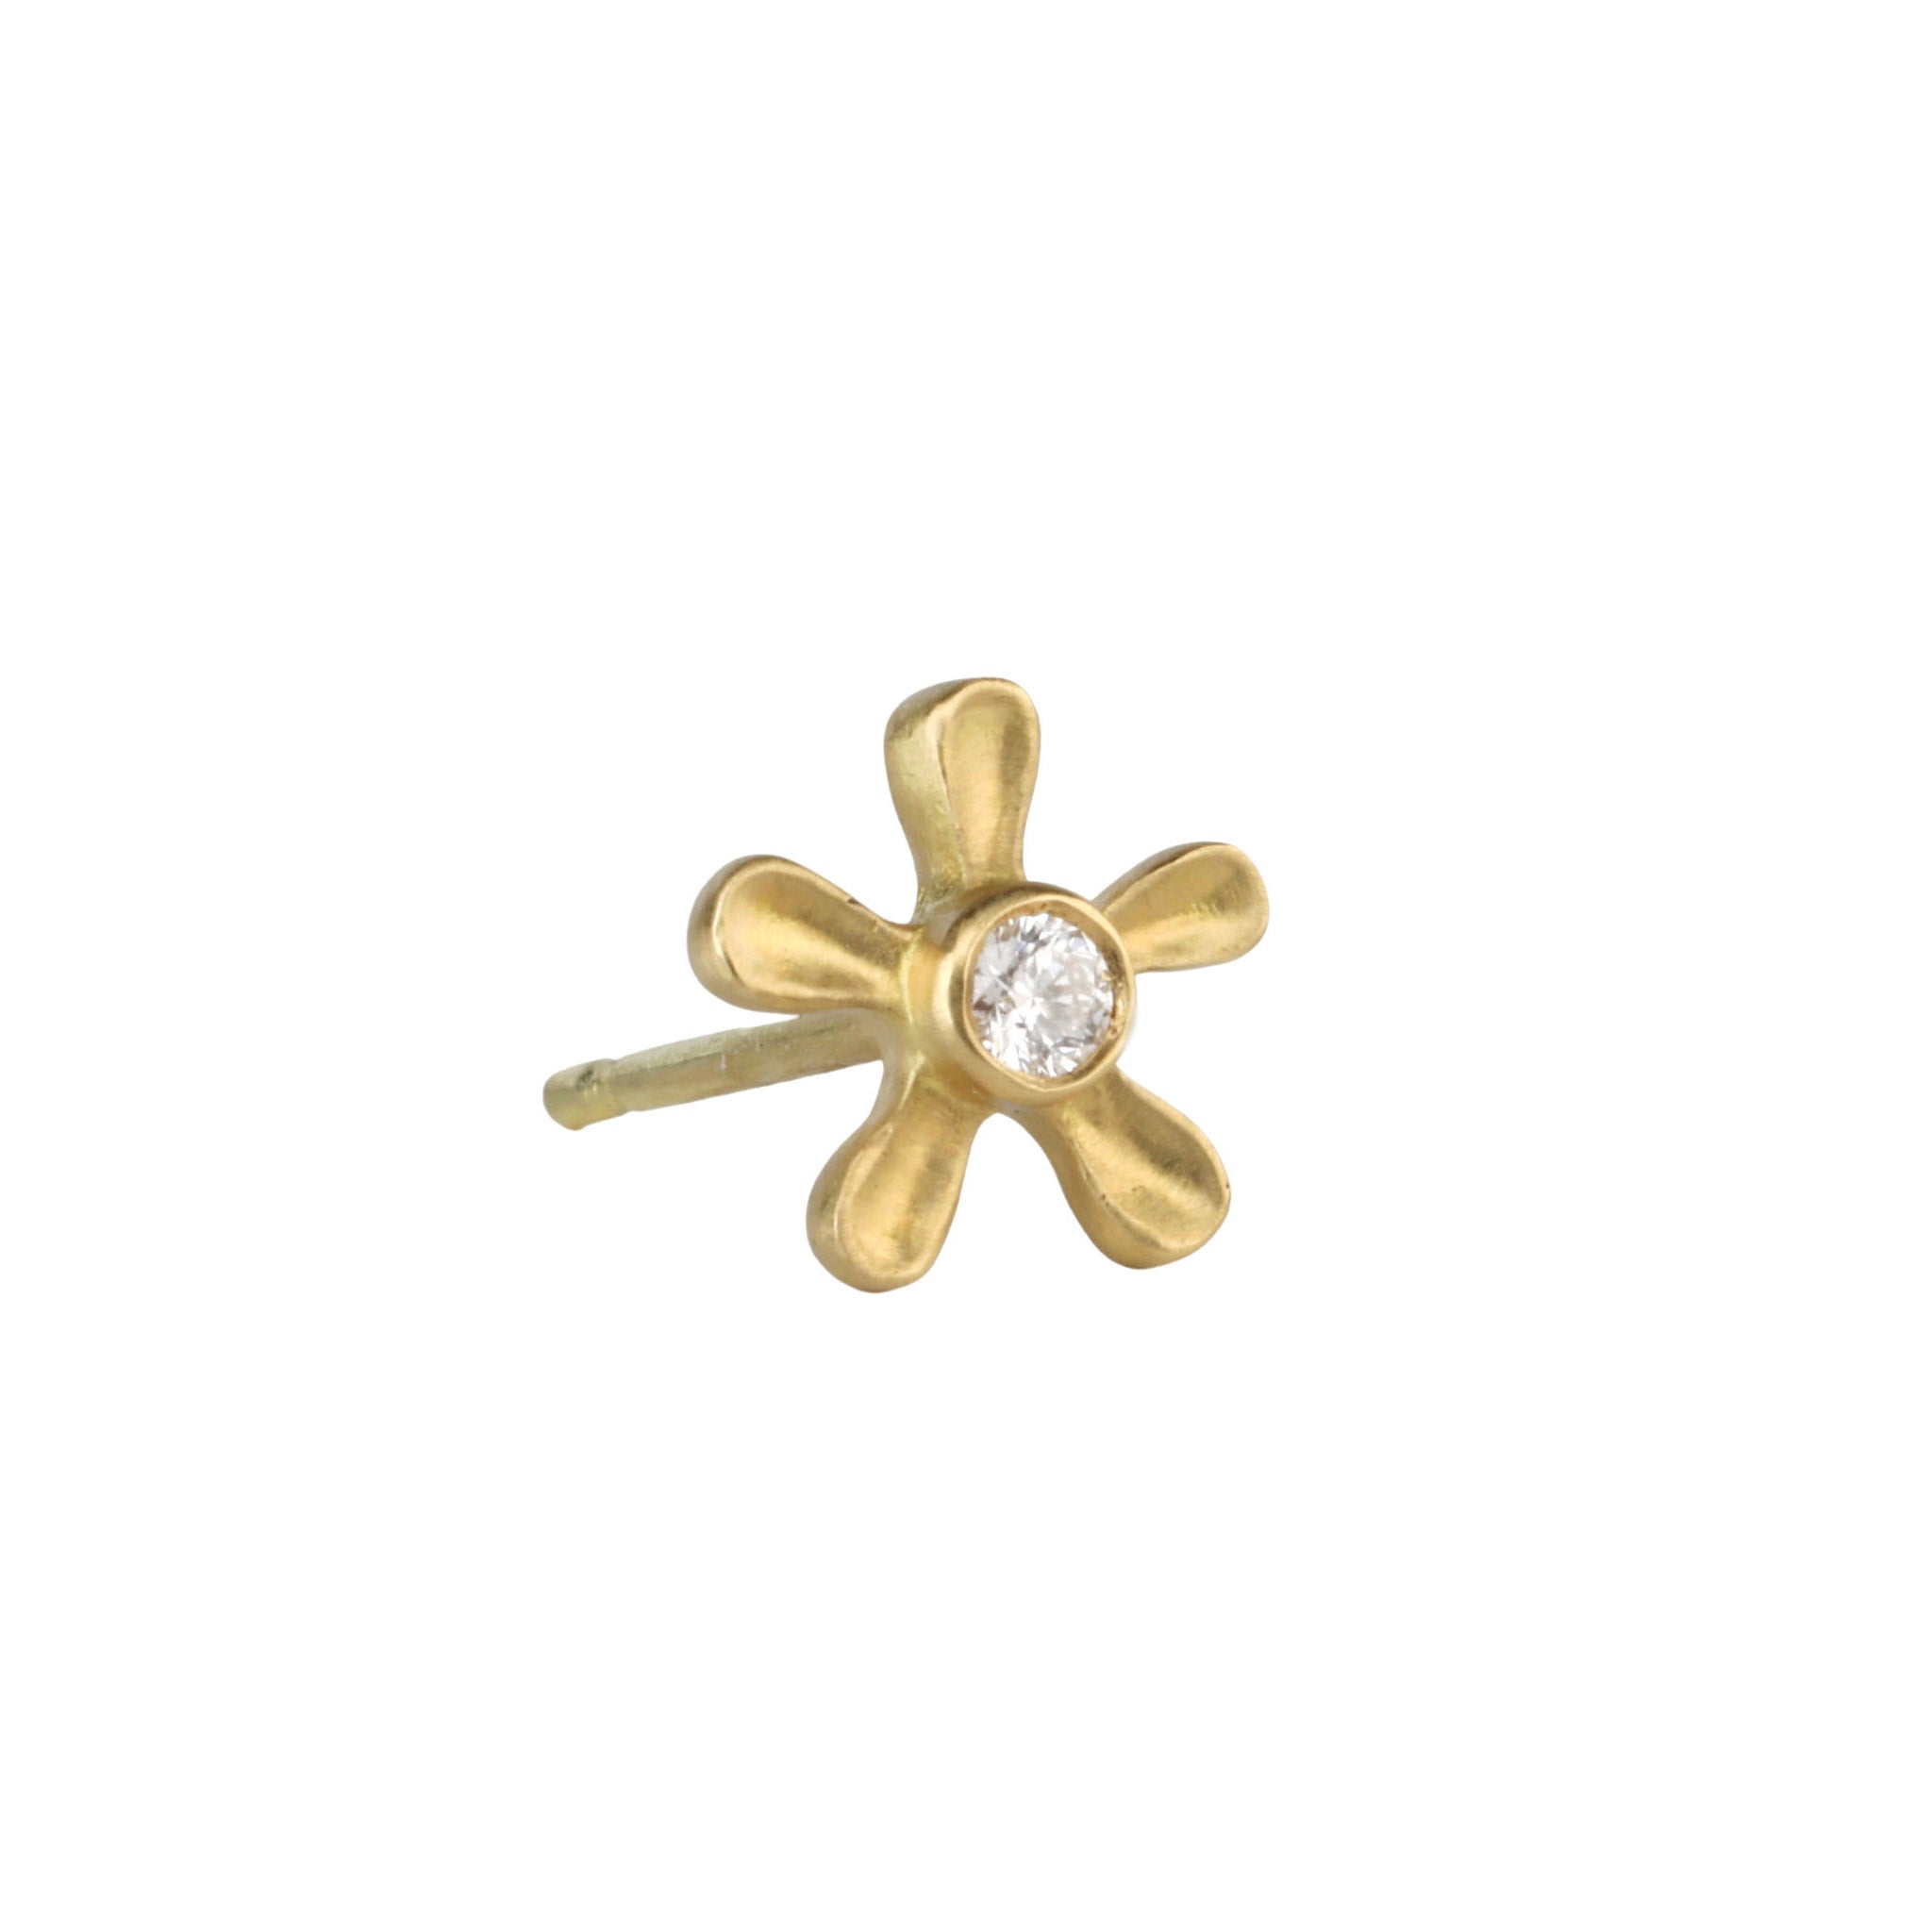 Caroline Ellen 20K Gold Large Five Petal Flower Post Earrings with Diamond Center